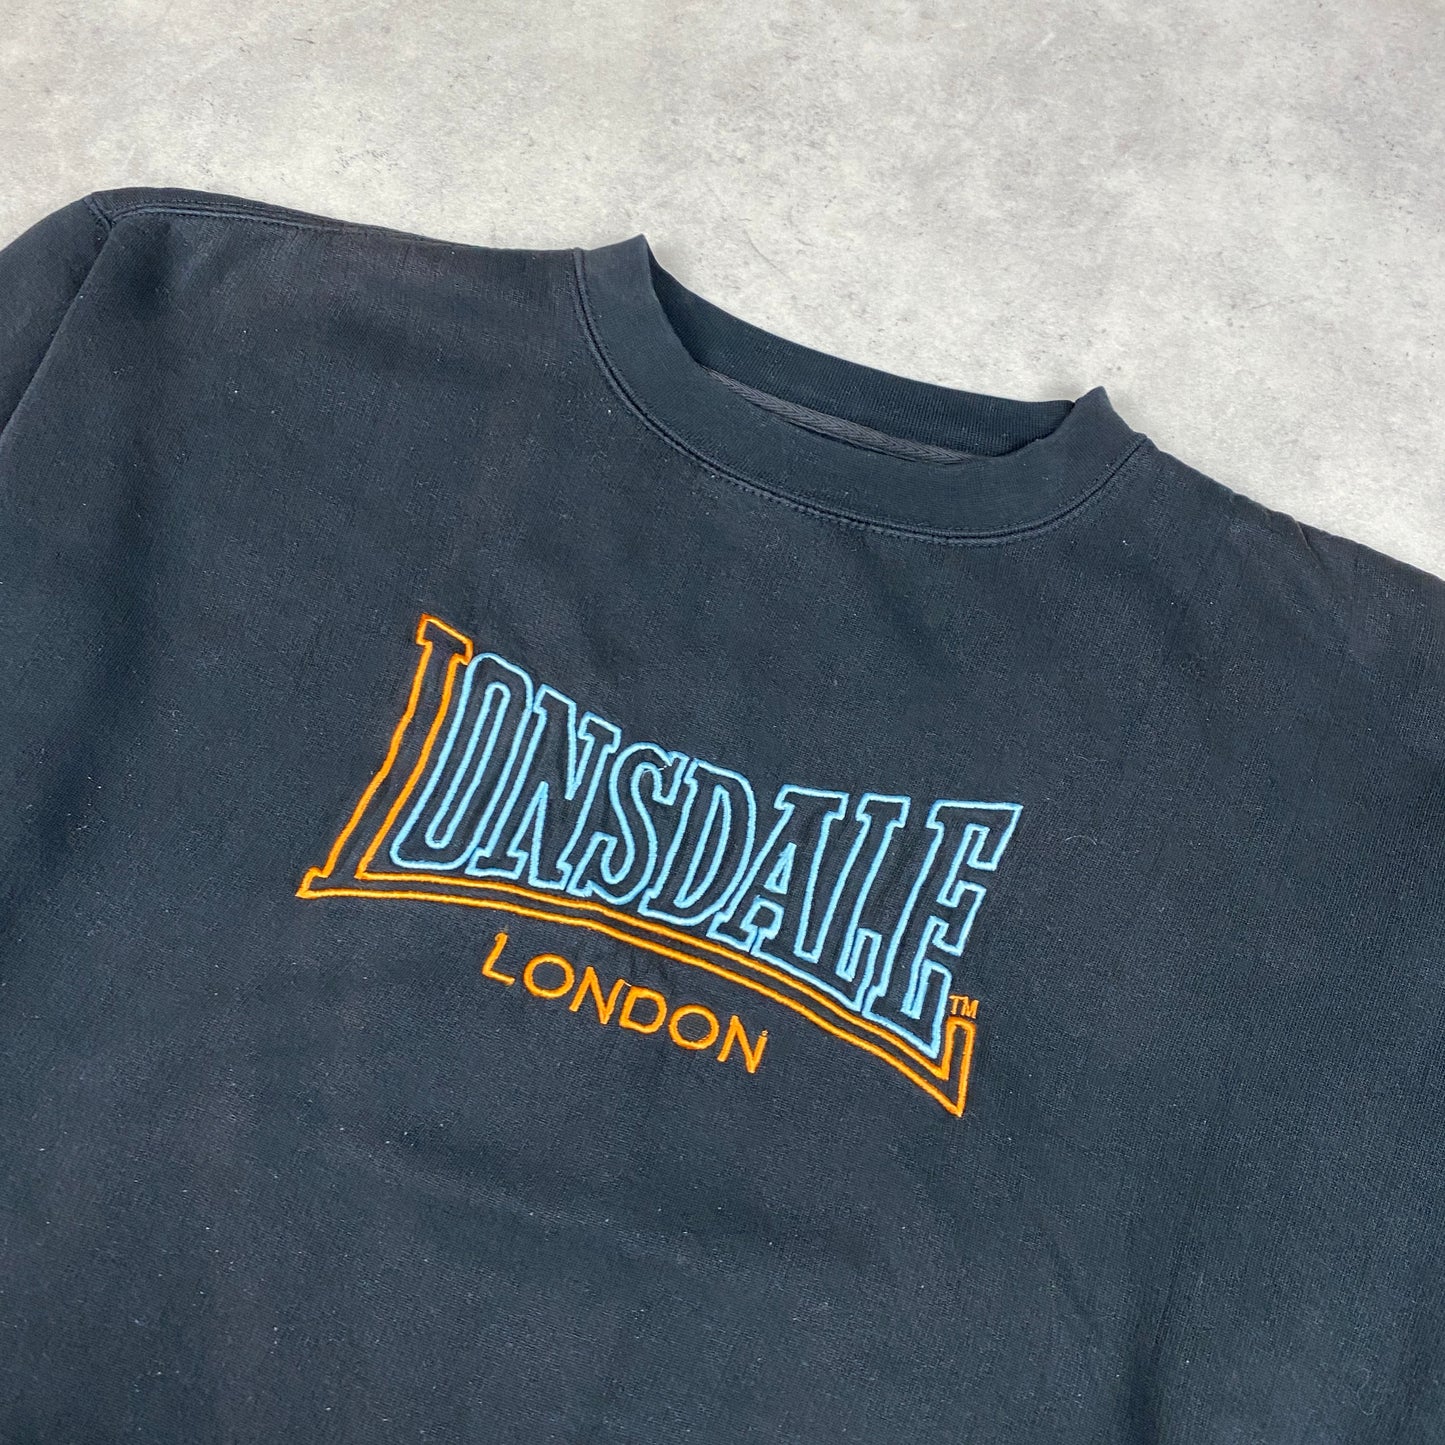 Lonsdale London heavyweight sweater (M-L)